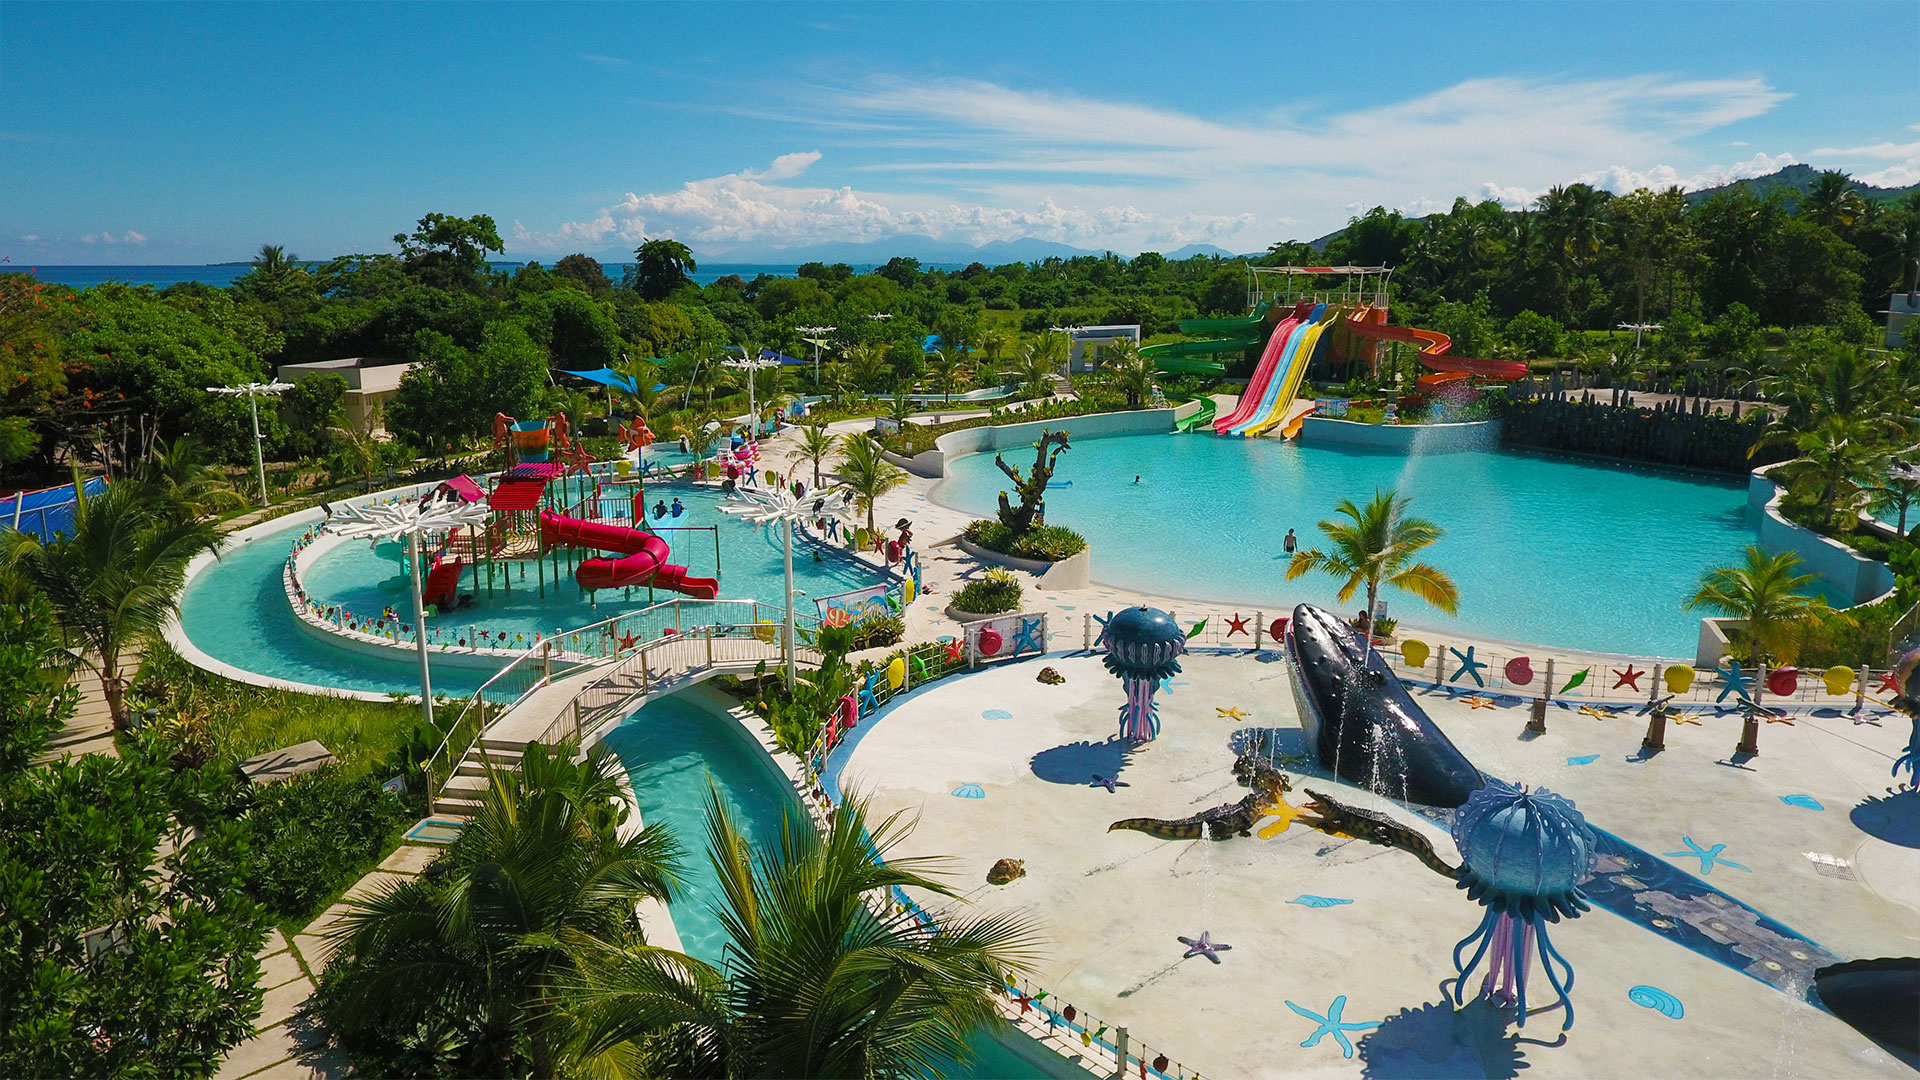 Waterpark: Astoria Palawan, An entertainment venue for aquatic recreation. 1920x1080 Full HD Background.